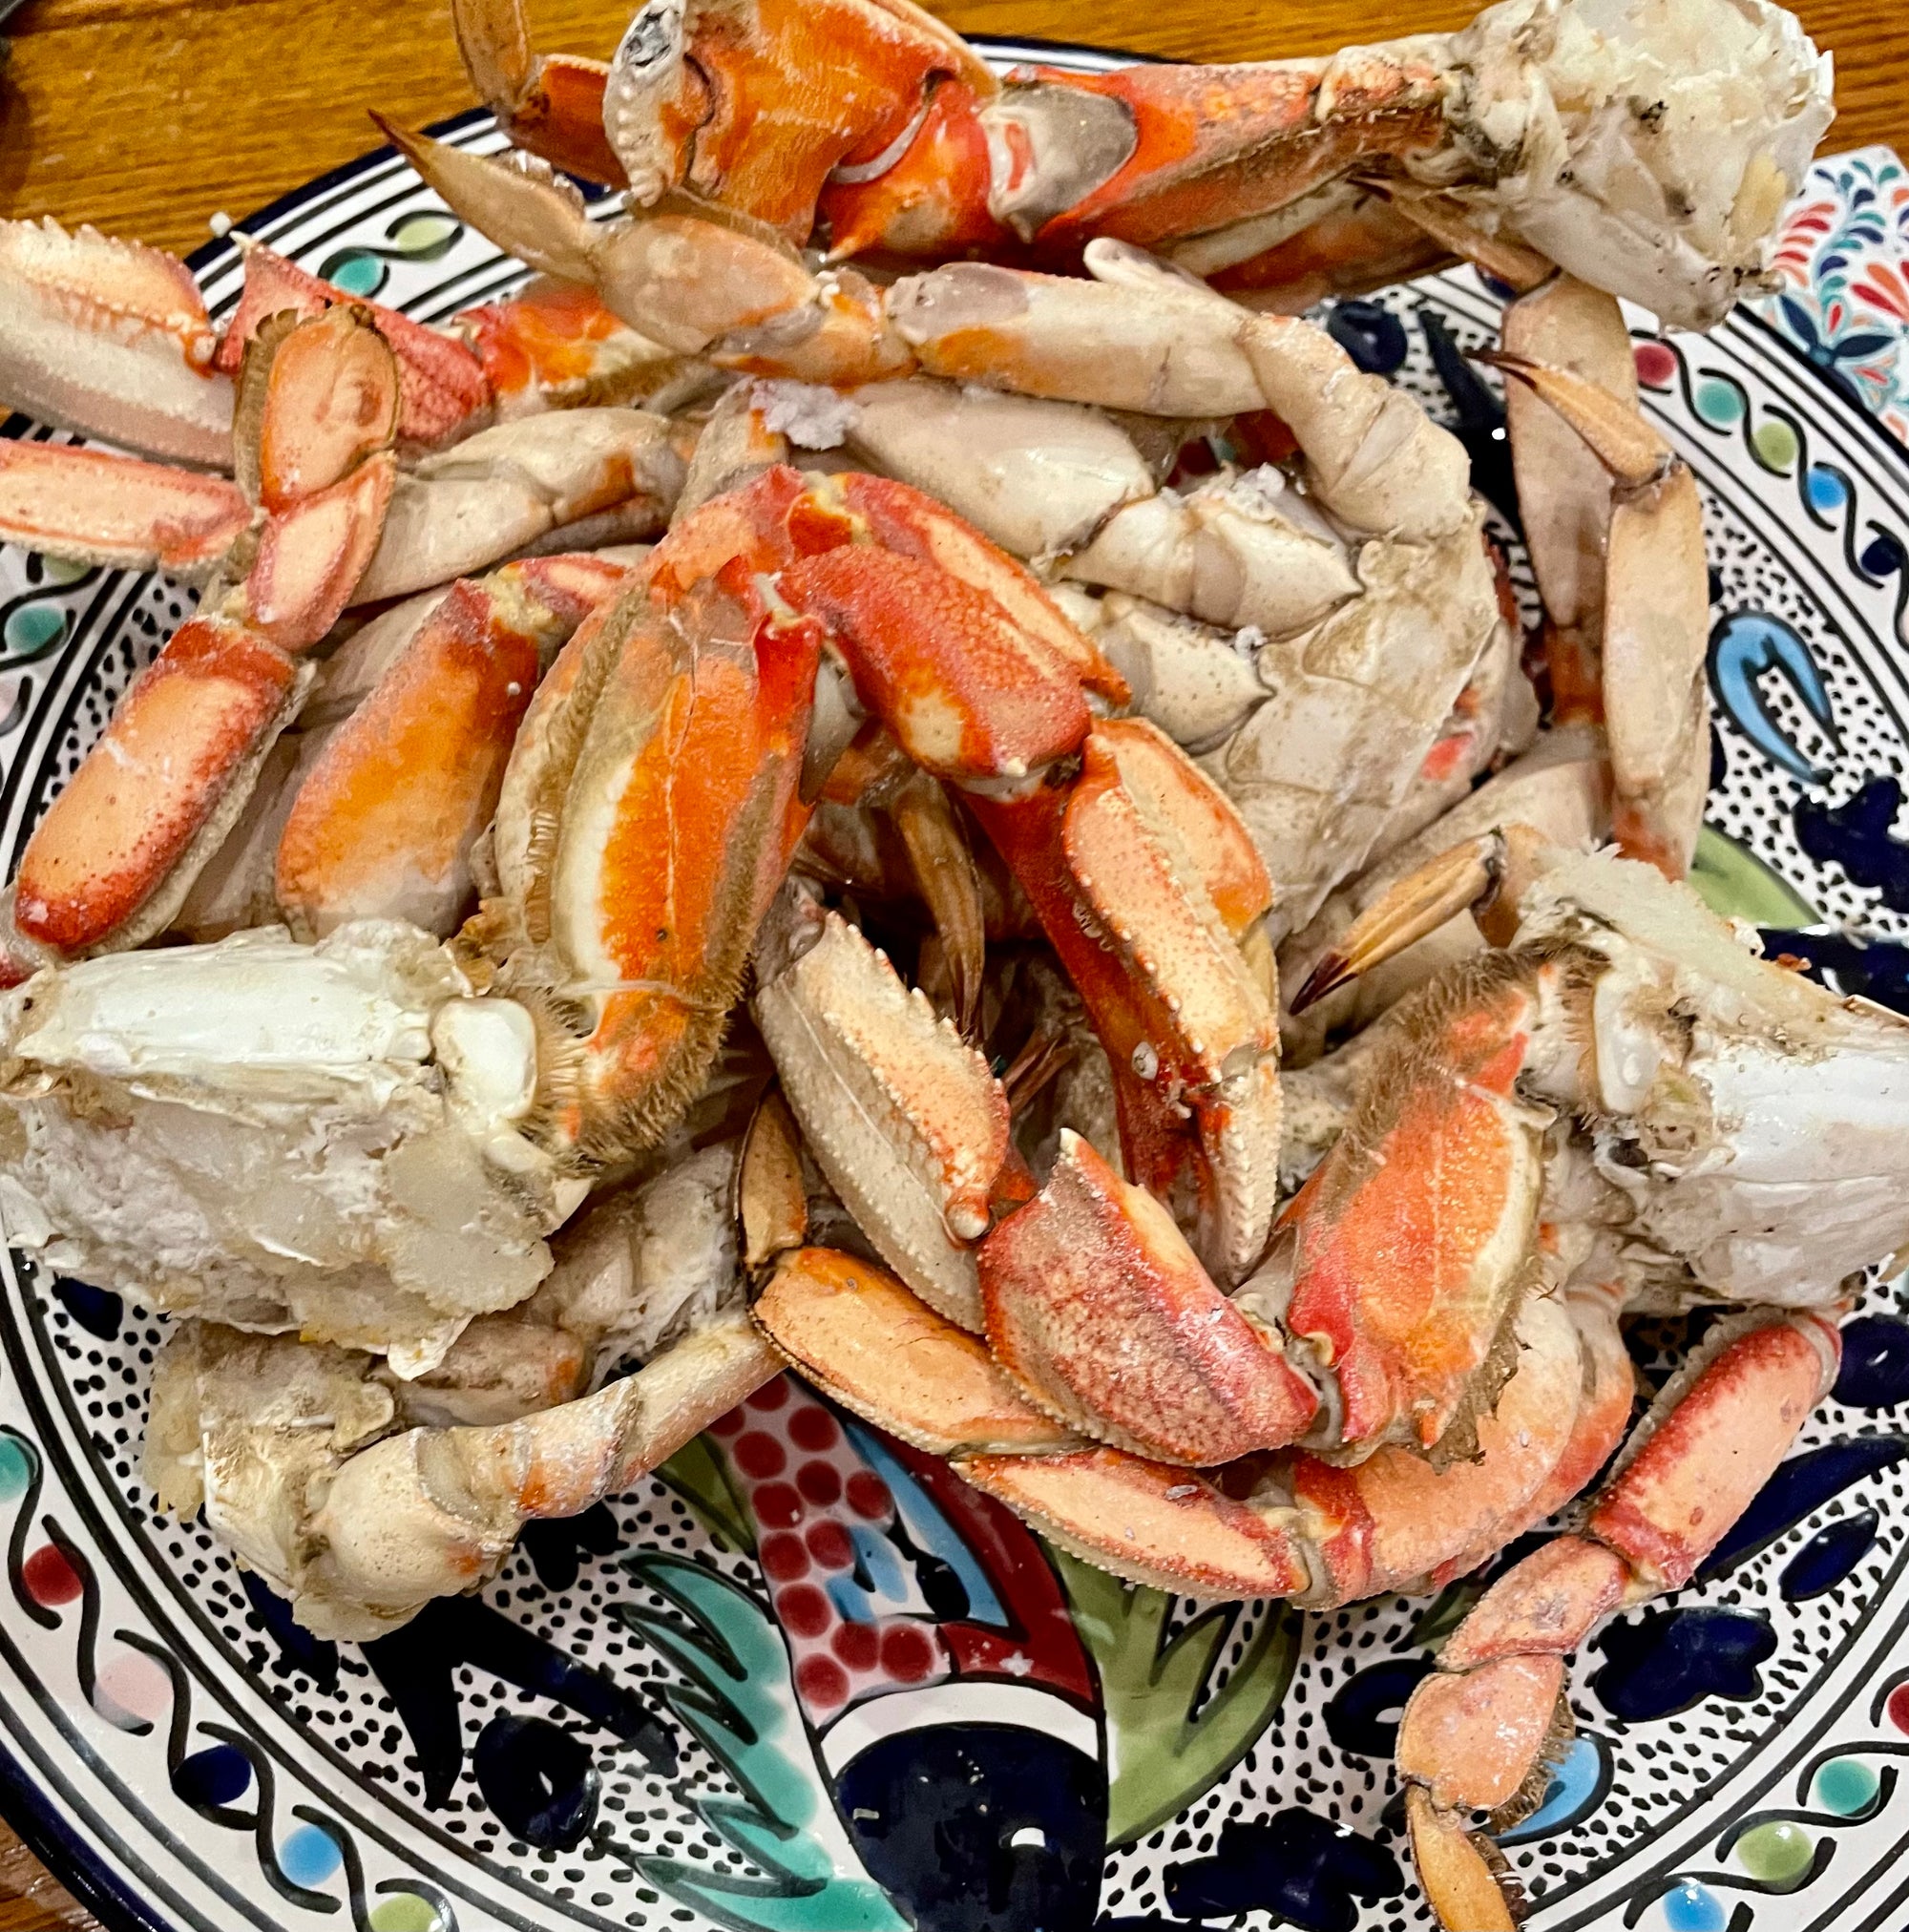 2024 Dungeness Crab Season, Brainfood Blog